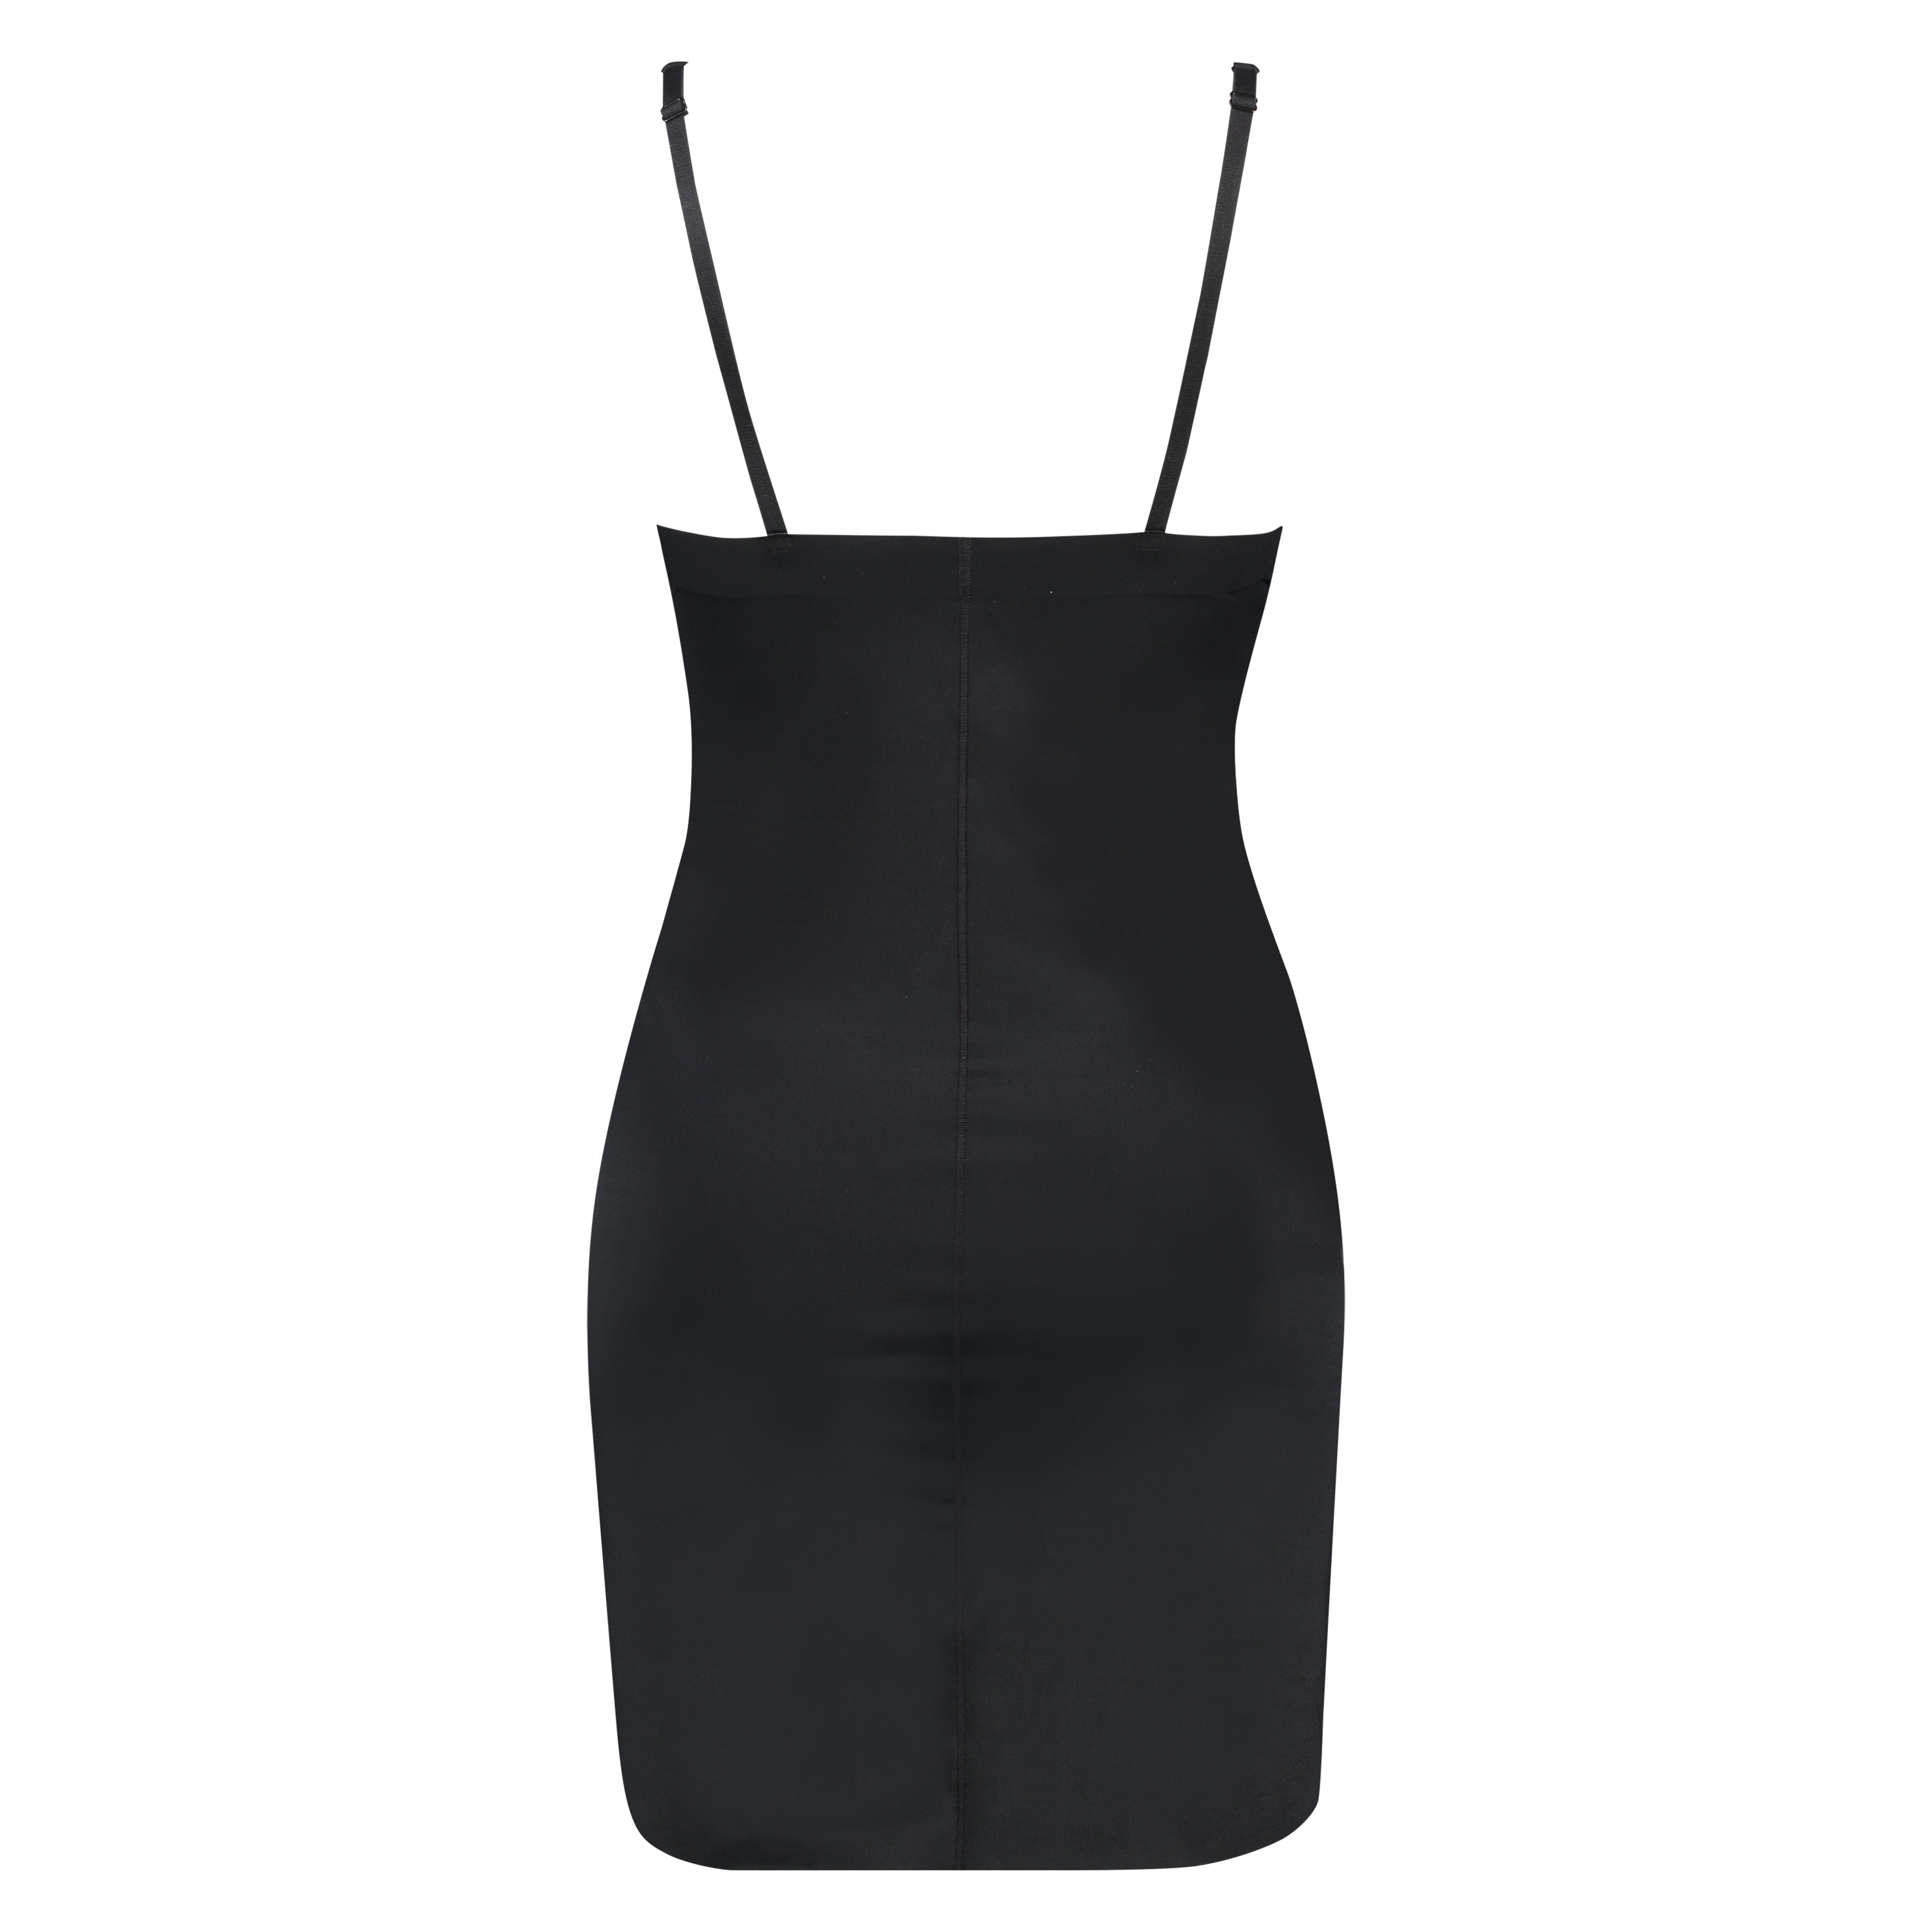 Opstrammende kjole i scuba-stof, sort, main